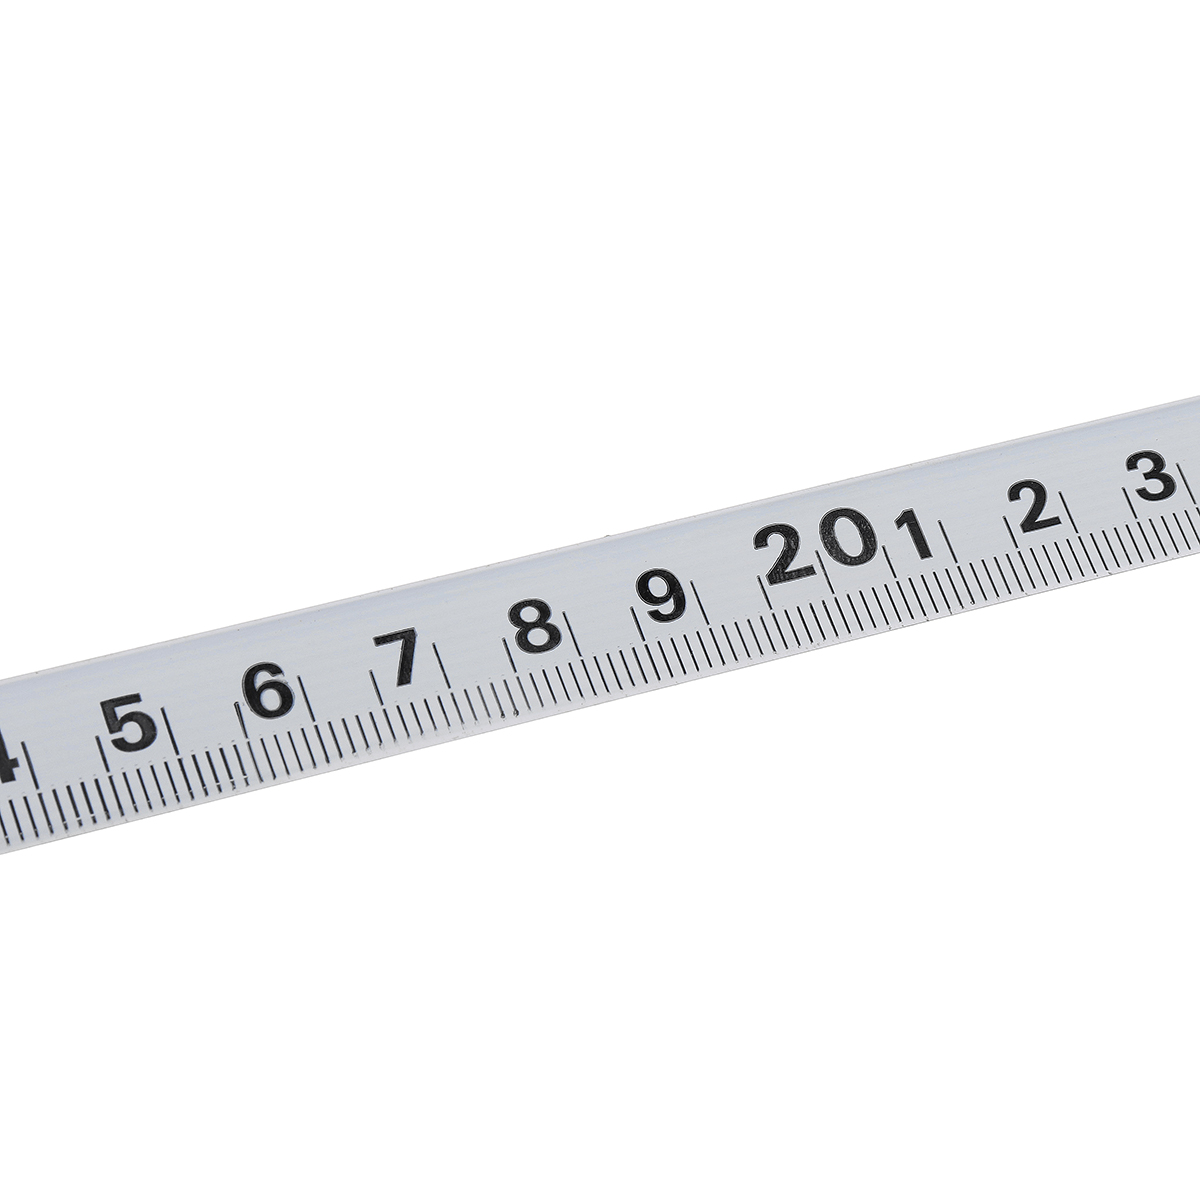 3050m-Fiberglass-Measuring-Tape-Measure-Reel-for-Landscaping-Building-Surveying-1849123-13